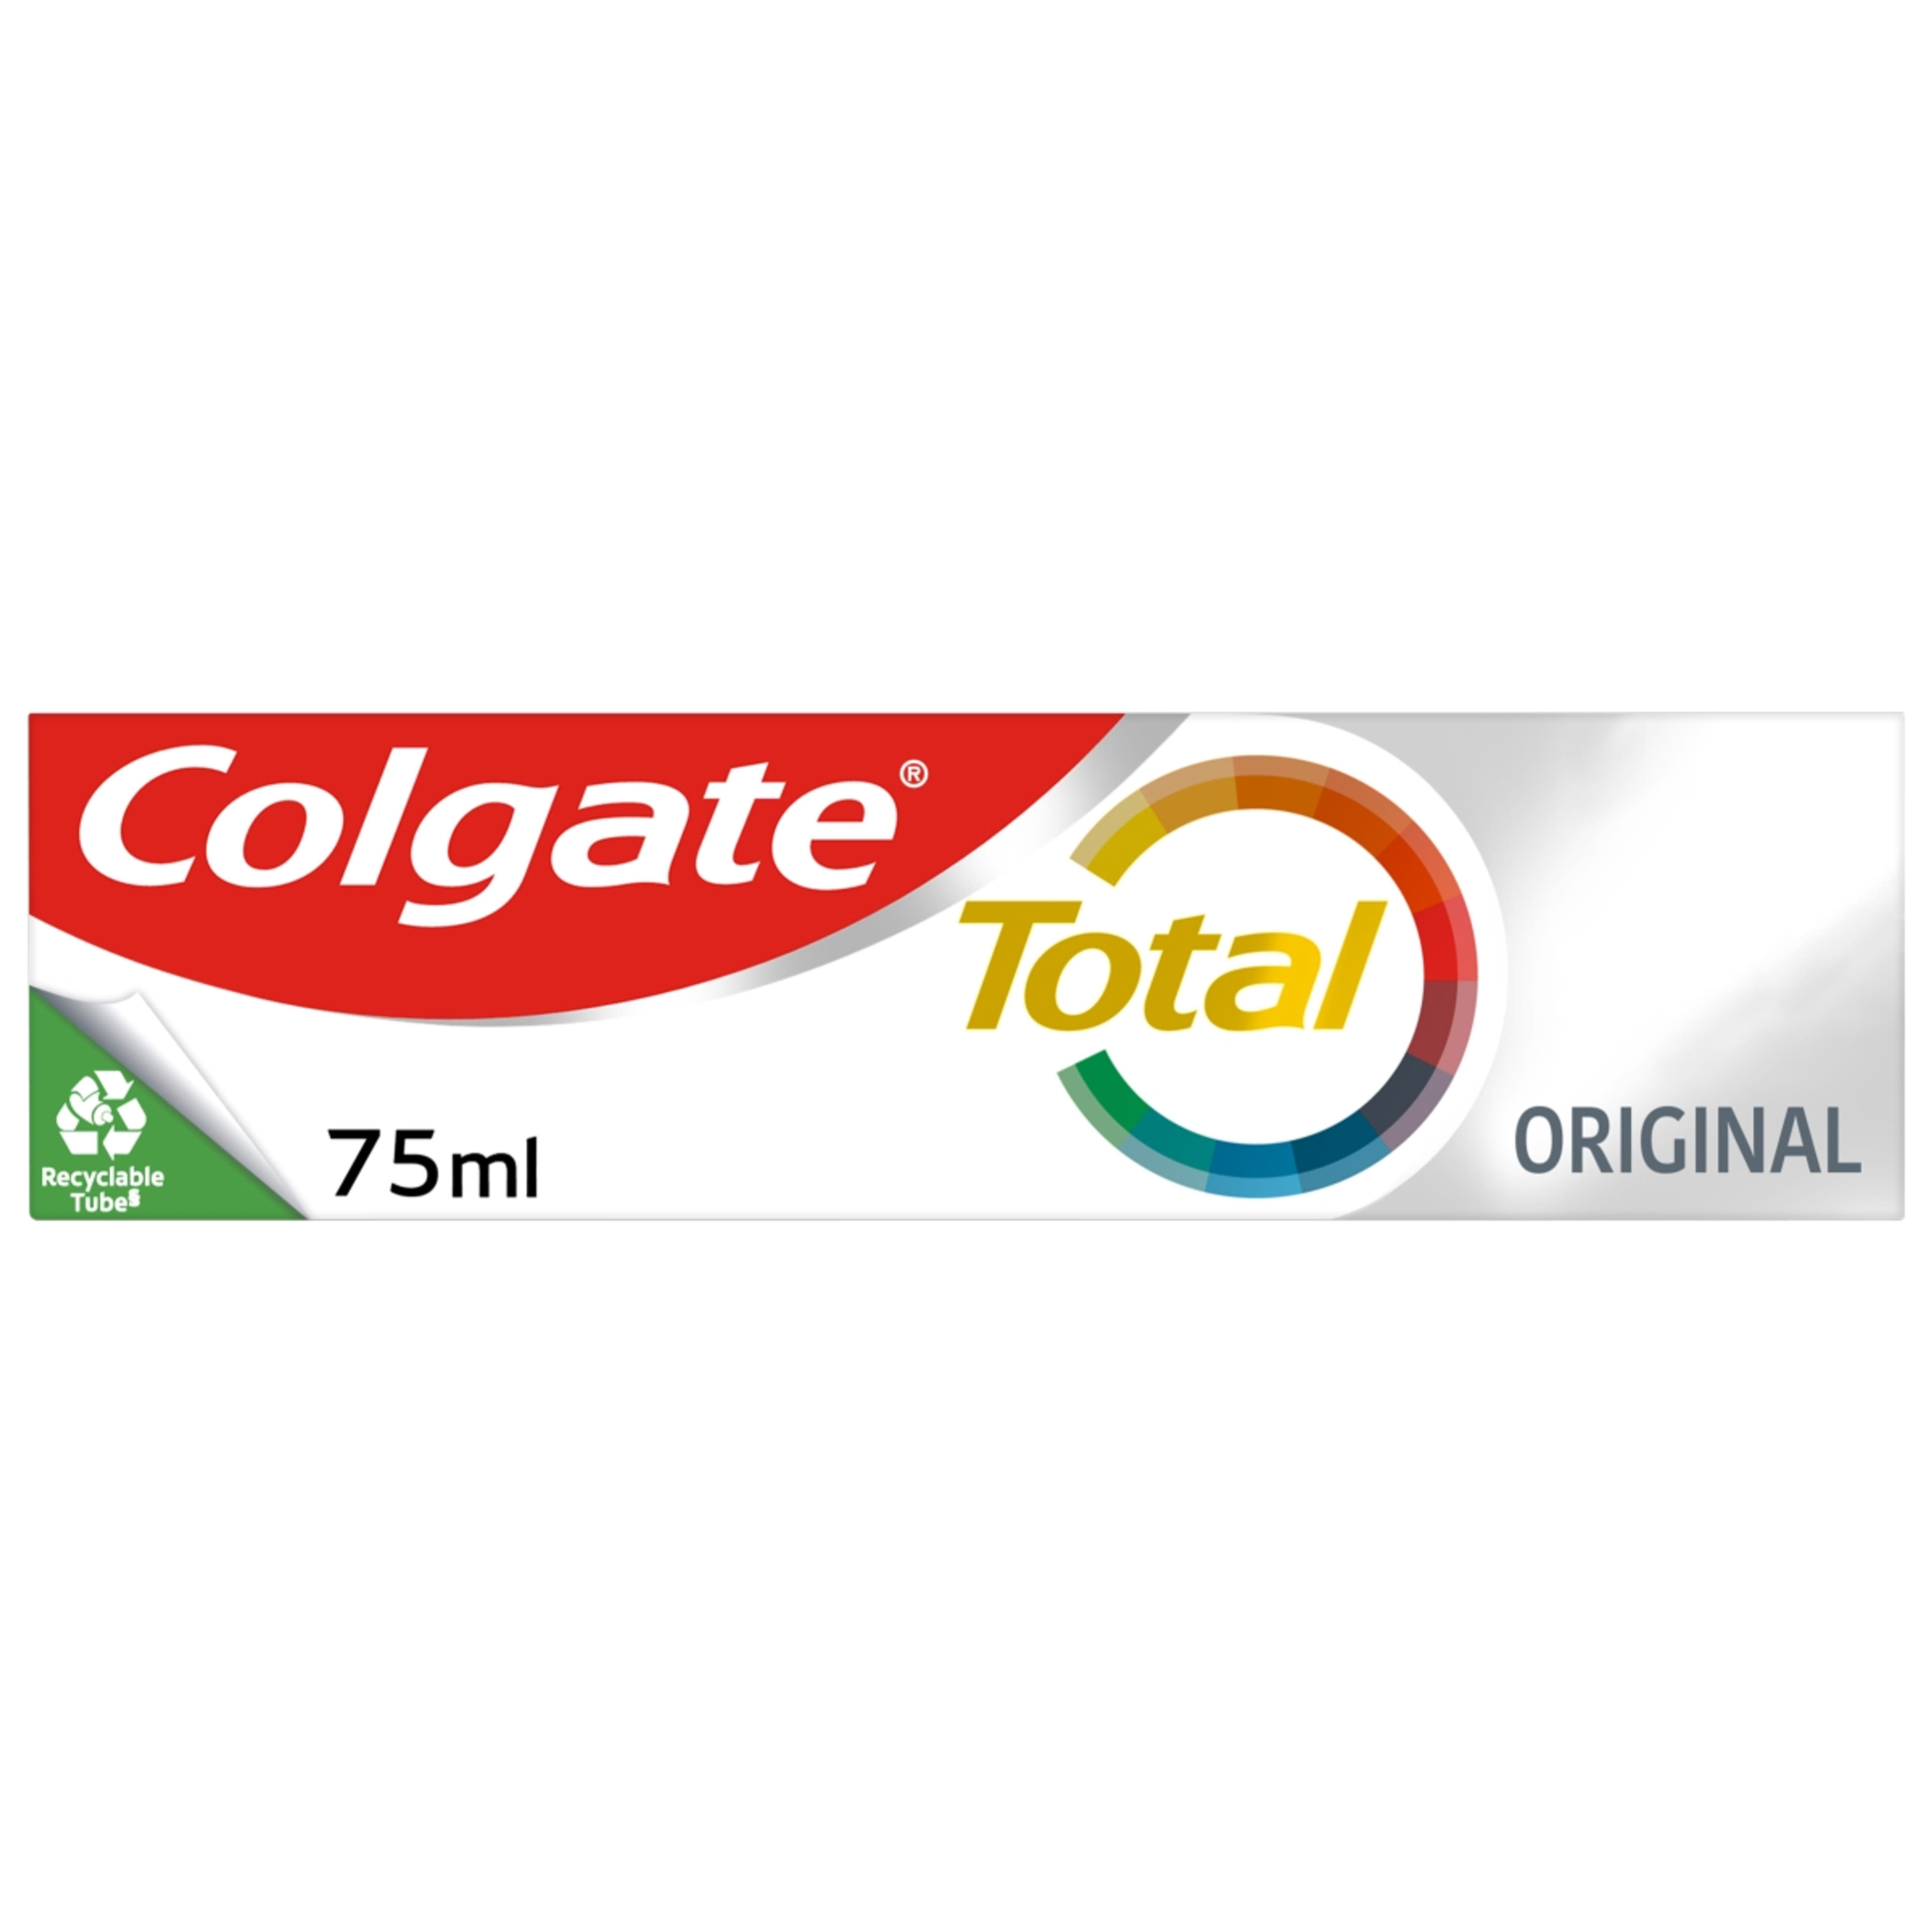 Colgate Total Original fogkrém - 75 ml-5